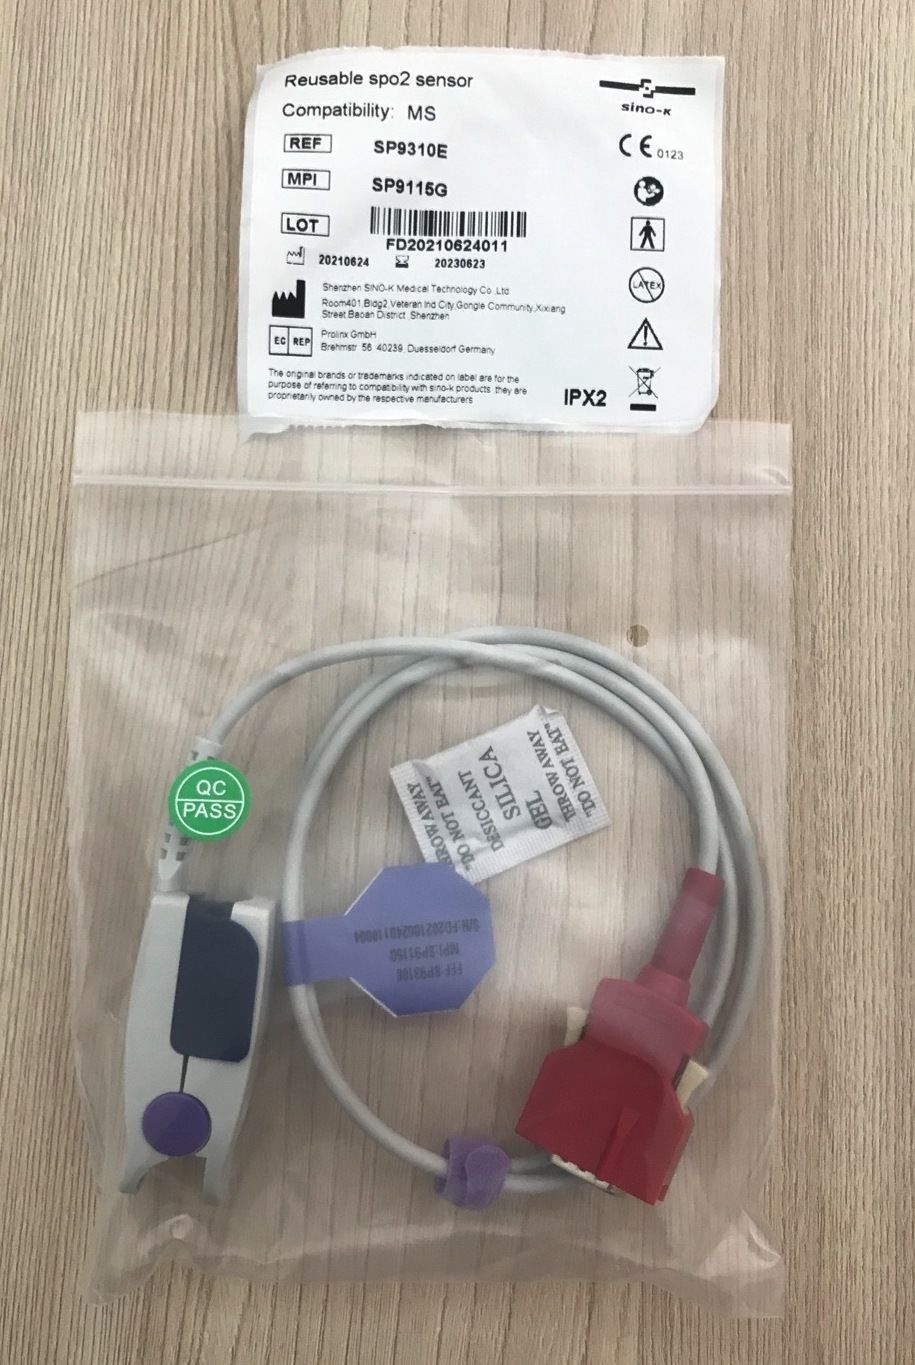 Spo2 Adult Masimo 20 pins cable for Patient Monitor Siare Neptune_สายแซทโพรบเคเบิ้ลเครื่องวัดสัญญาณชีพผู้ป่วย Siare รุ่น Neptune